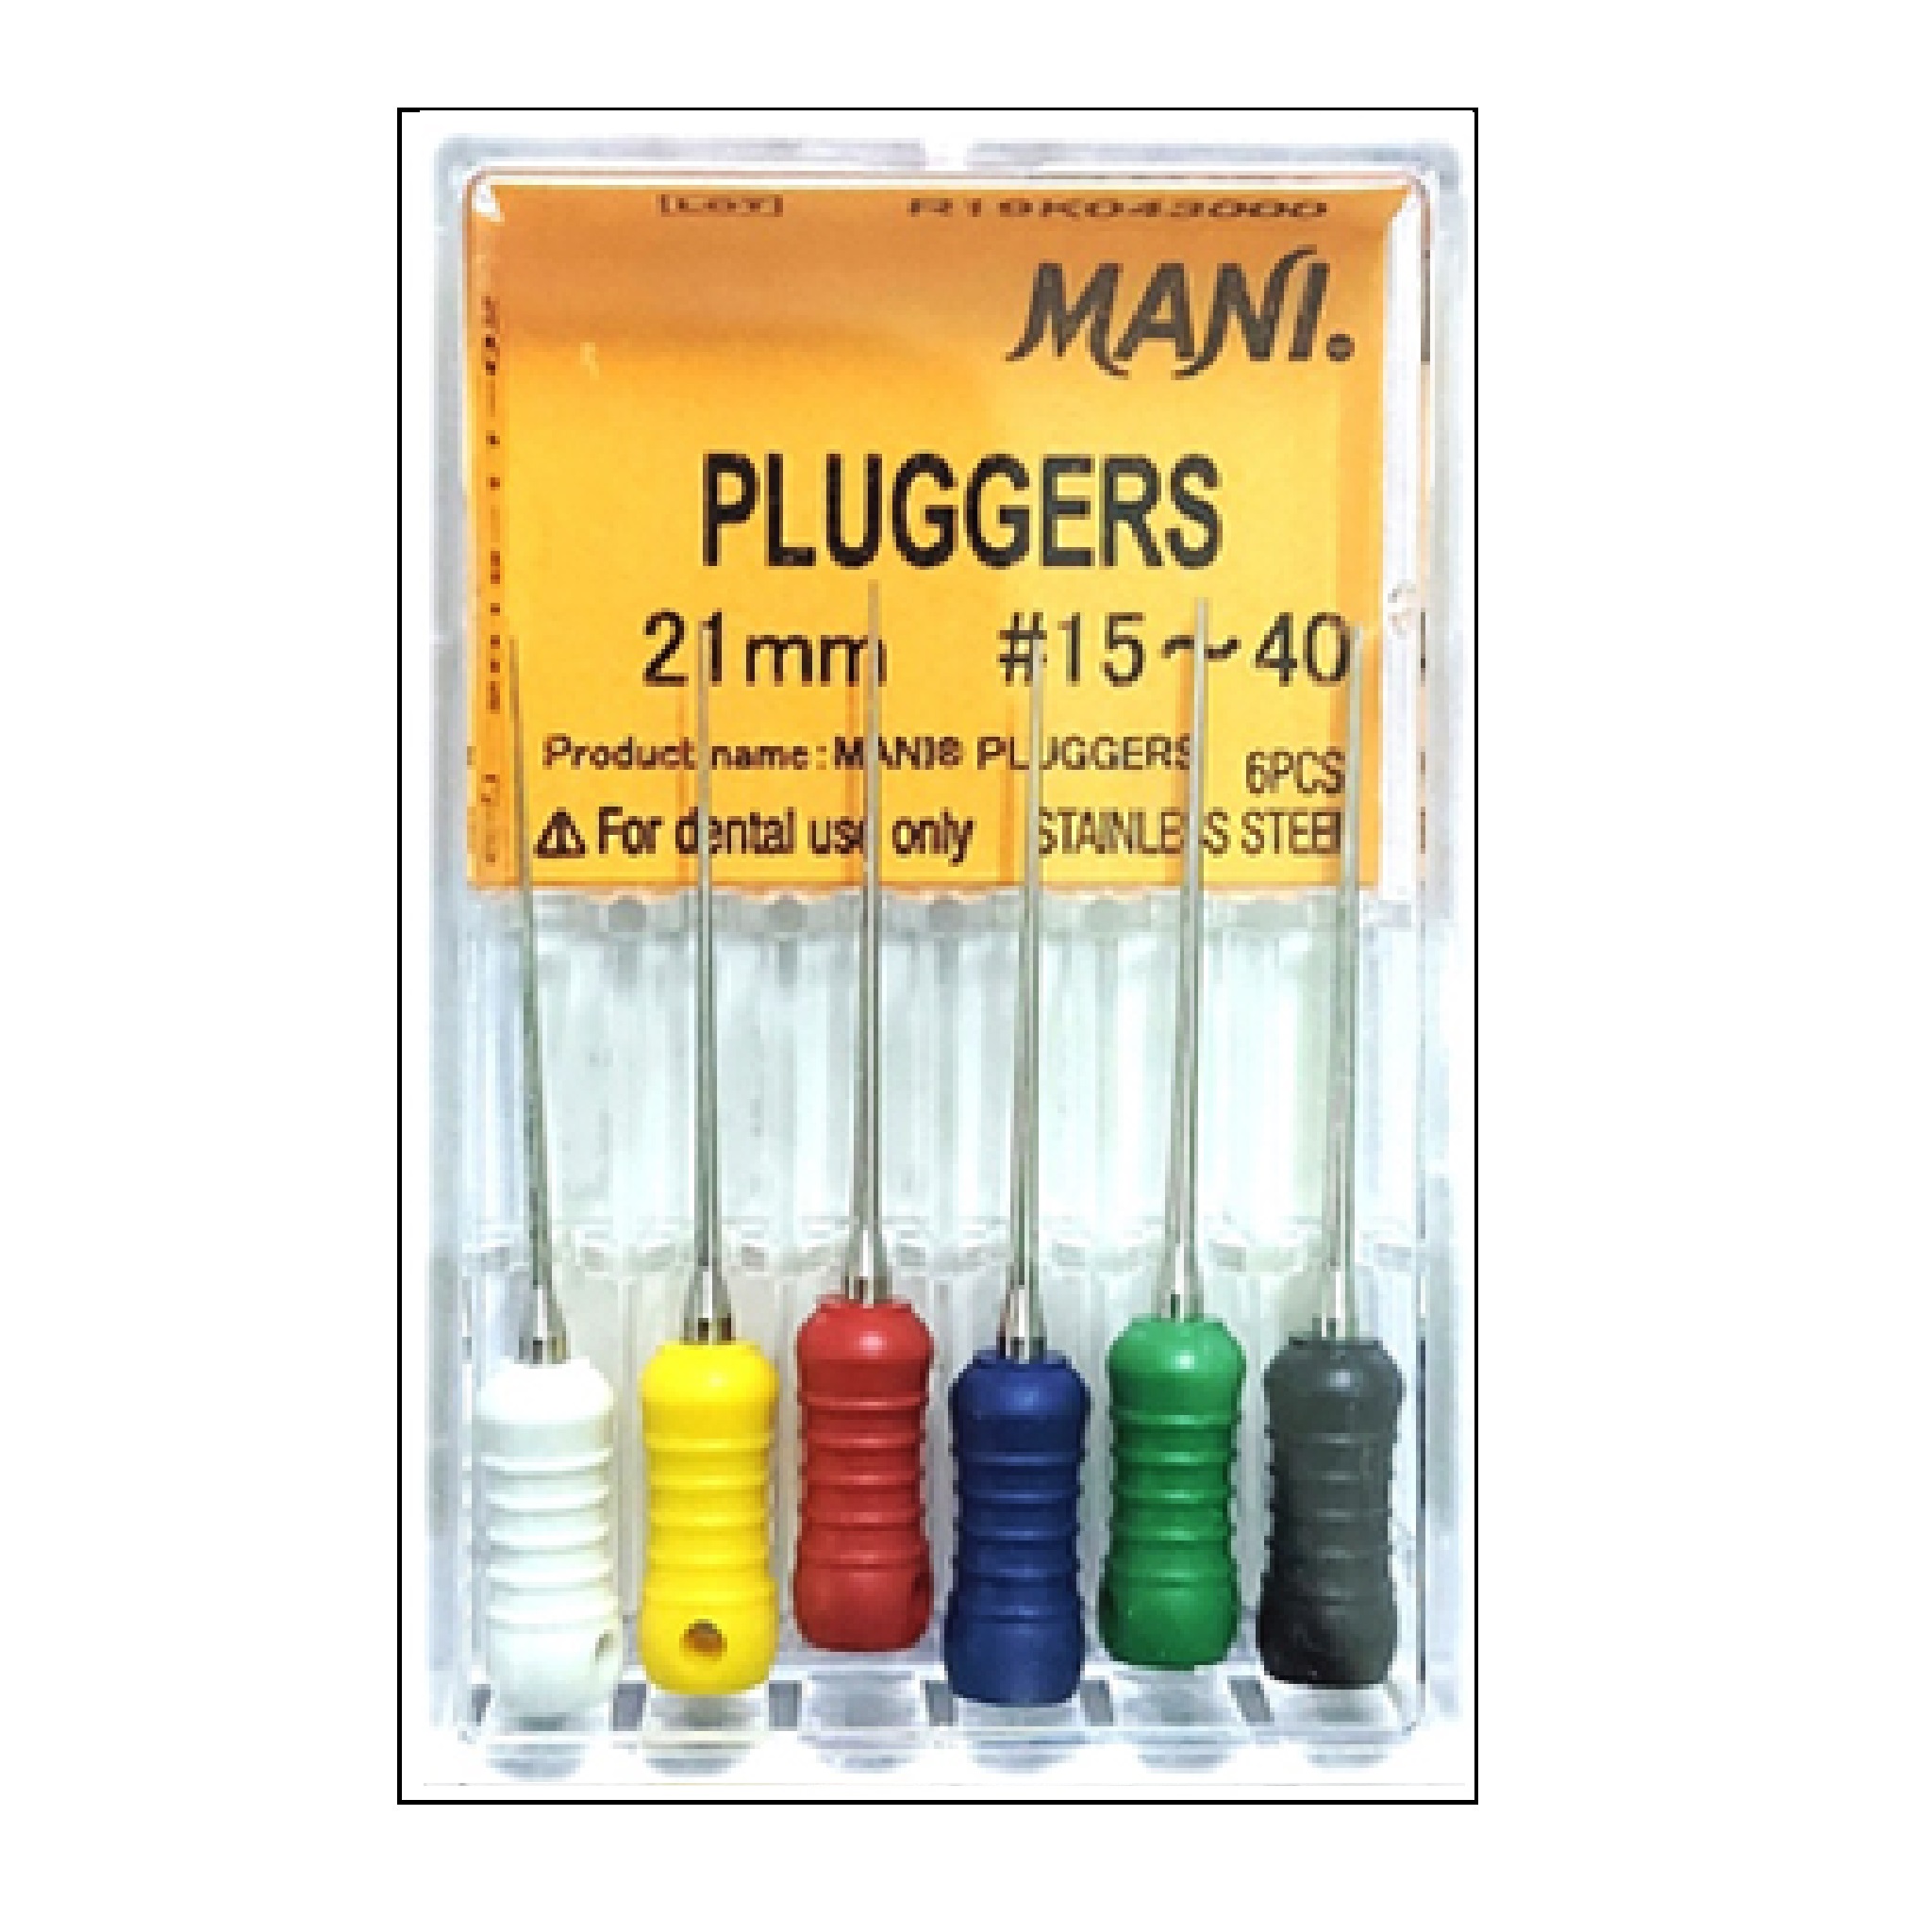 Mani Pluggers 25mm 25